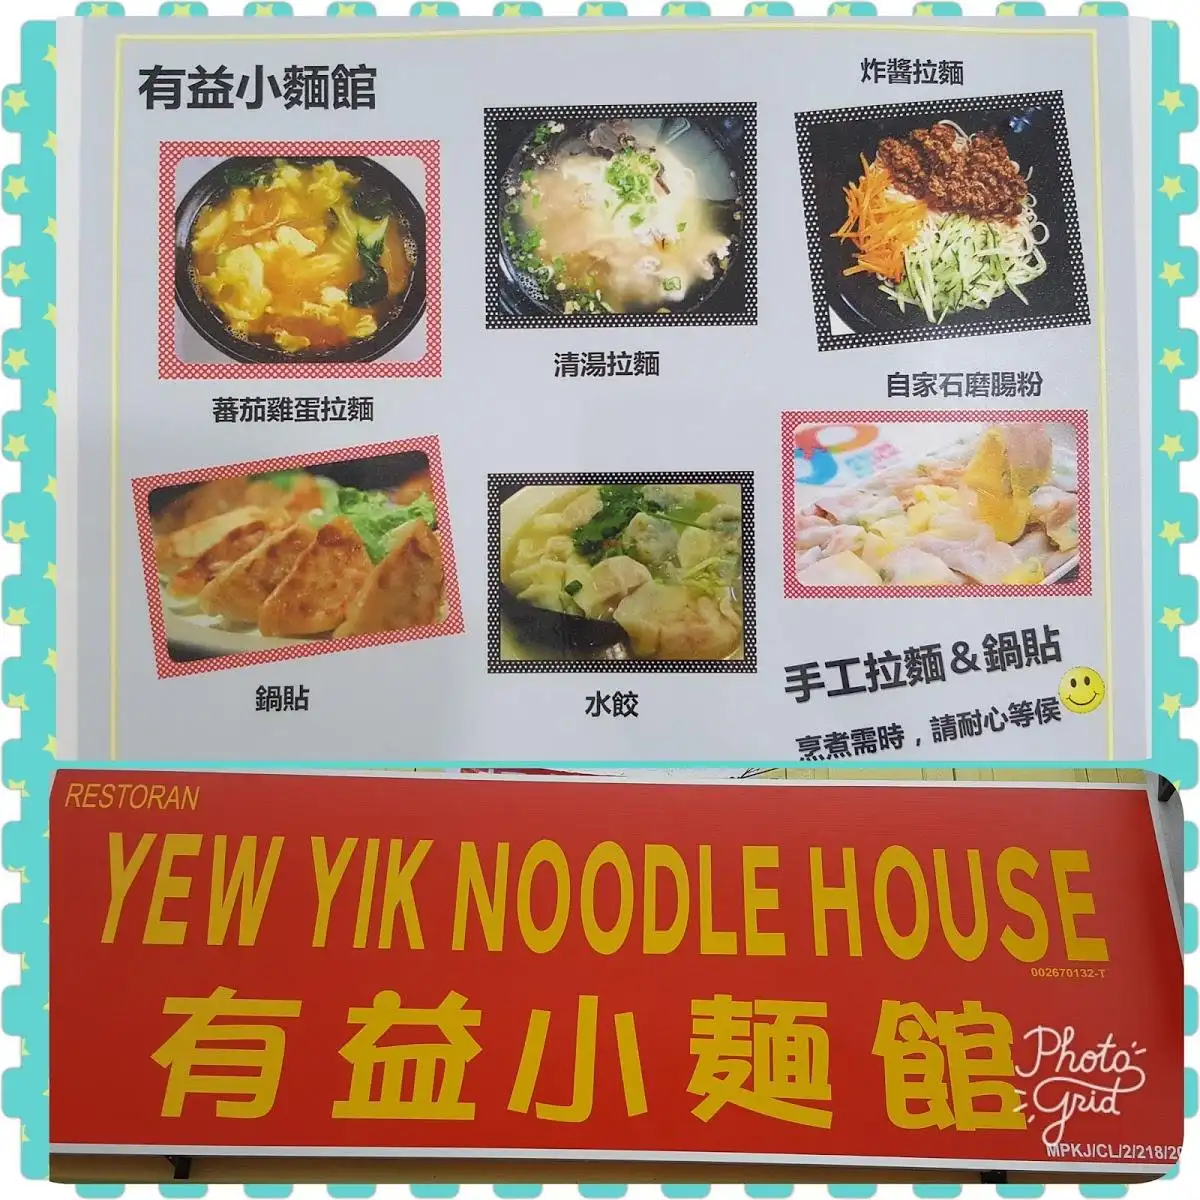 Yew Yik Noodle House 有益小麵馆